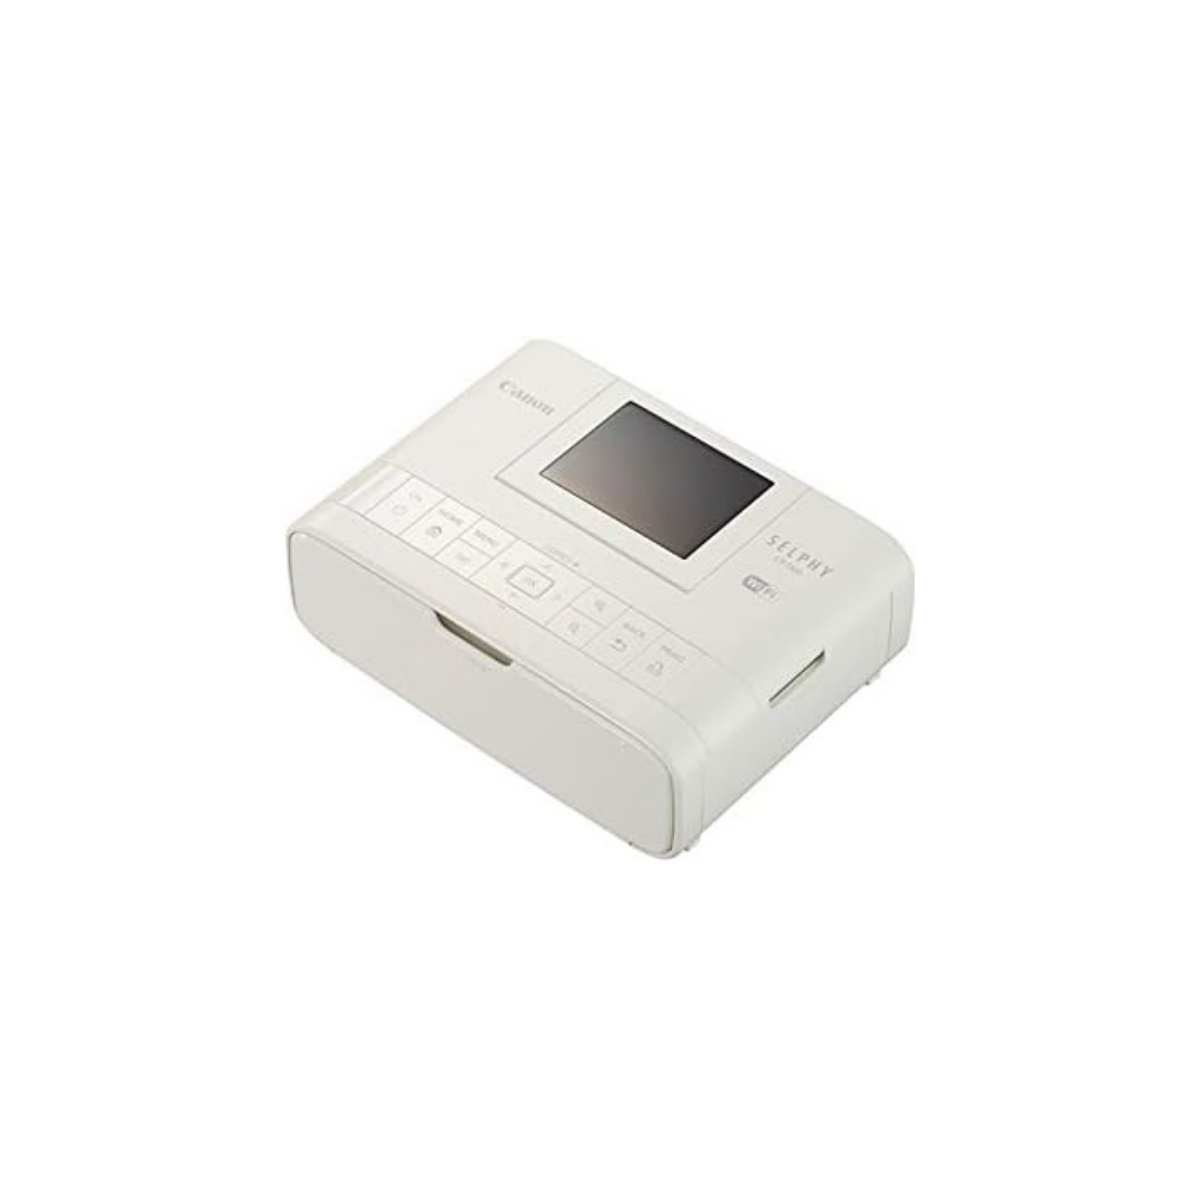 Imprimante photo portable couleur Canon SELPHY CP1300, Blanc